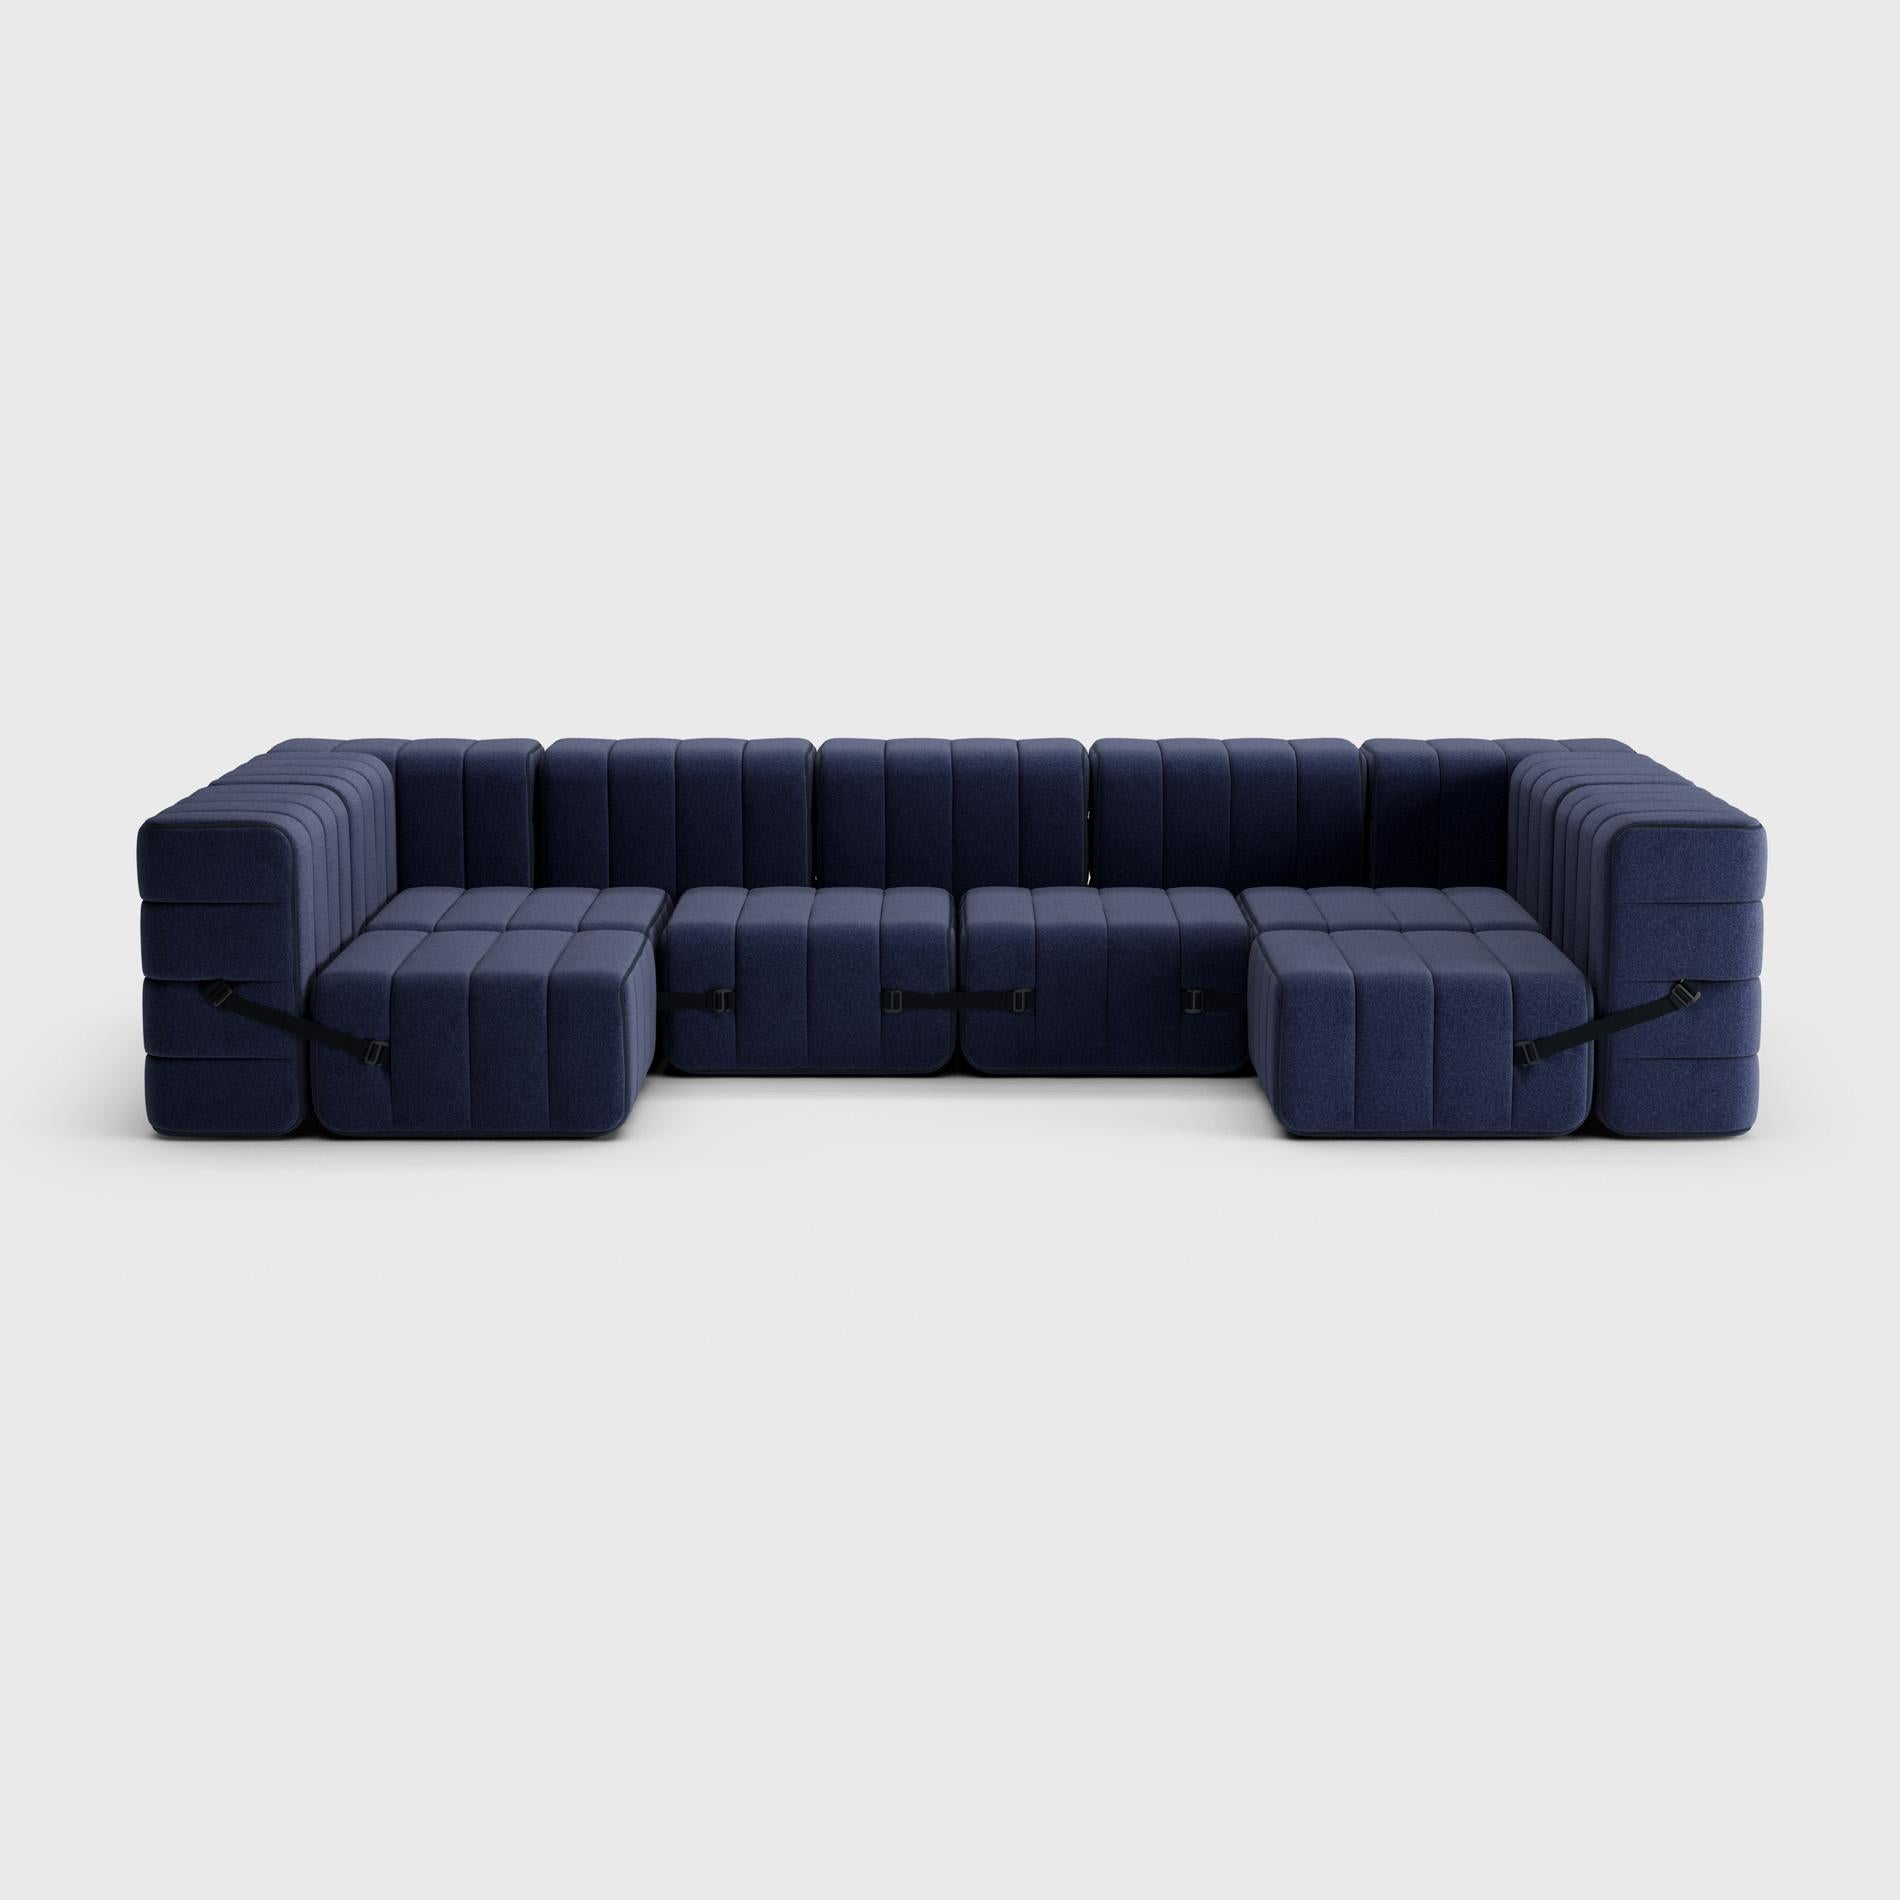 Contemporary Curt Single Module, Fabric Dama '0048 Dark Blue', Curt Modular Sofa System For Sale